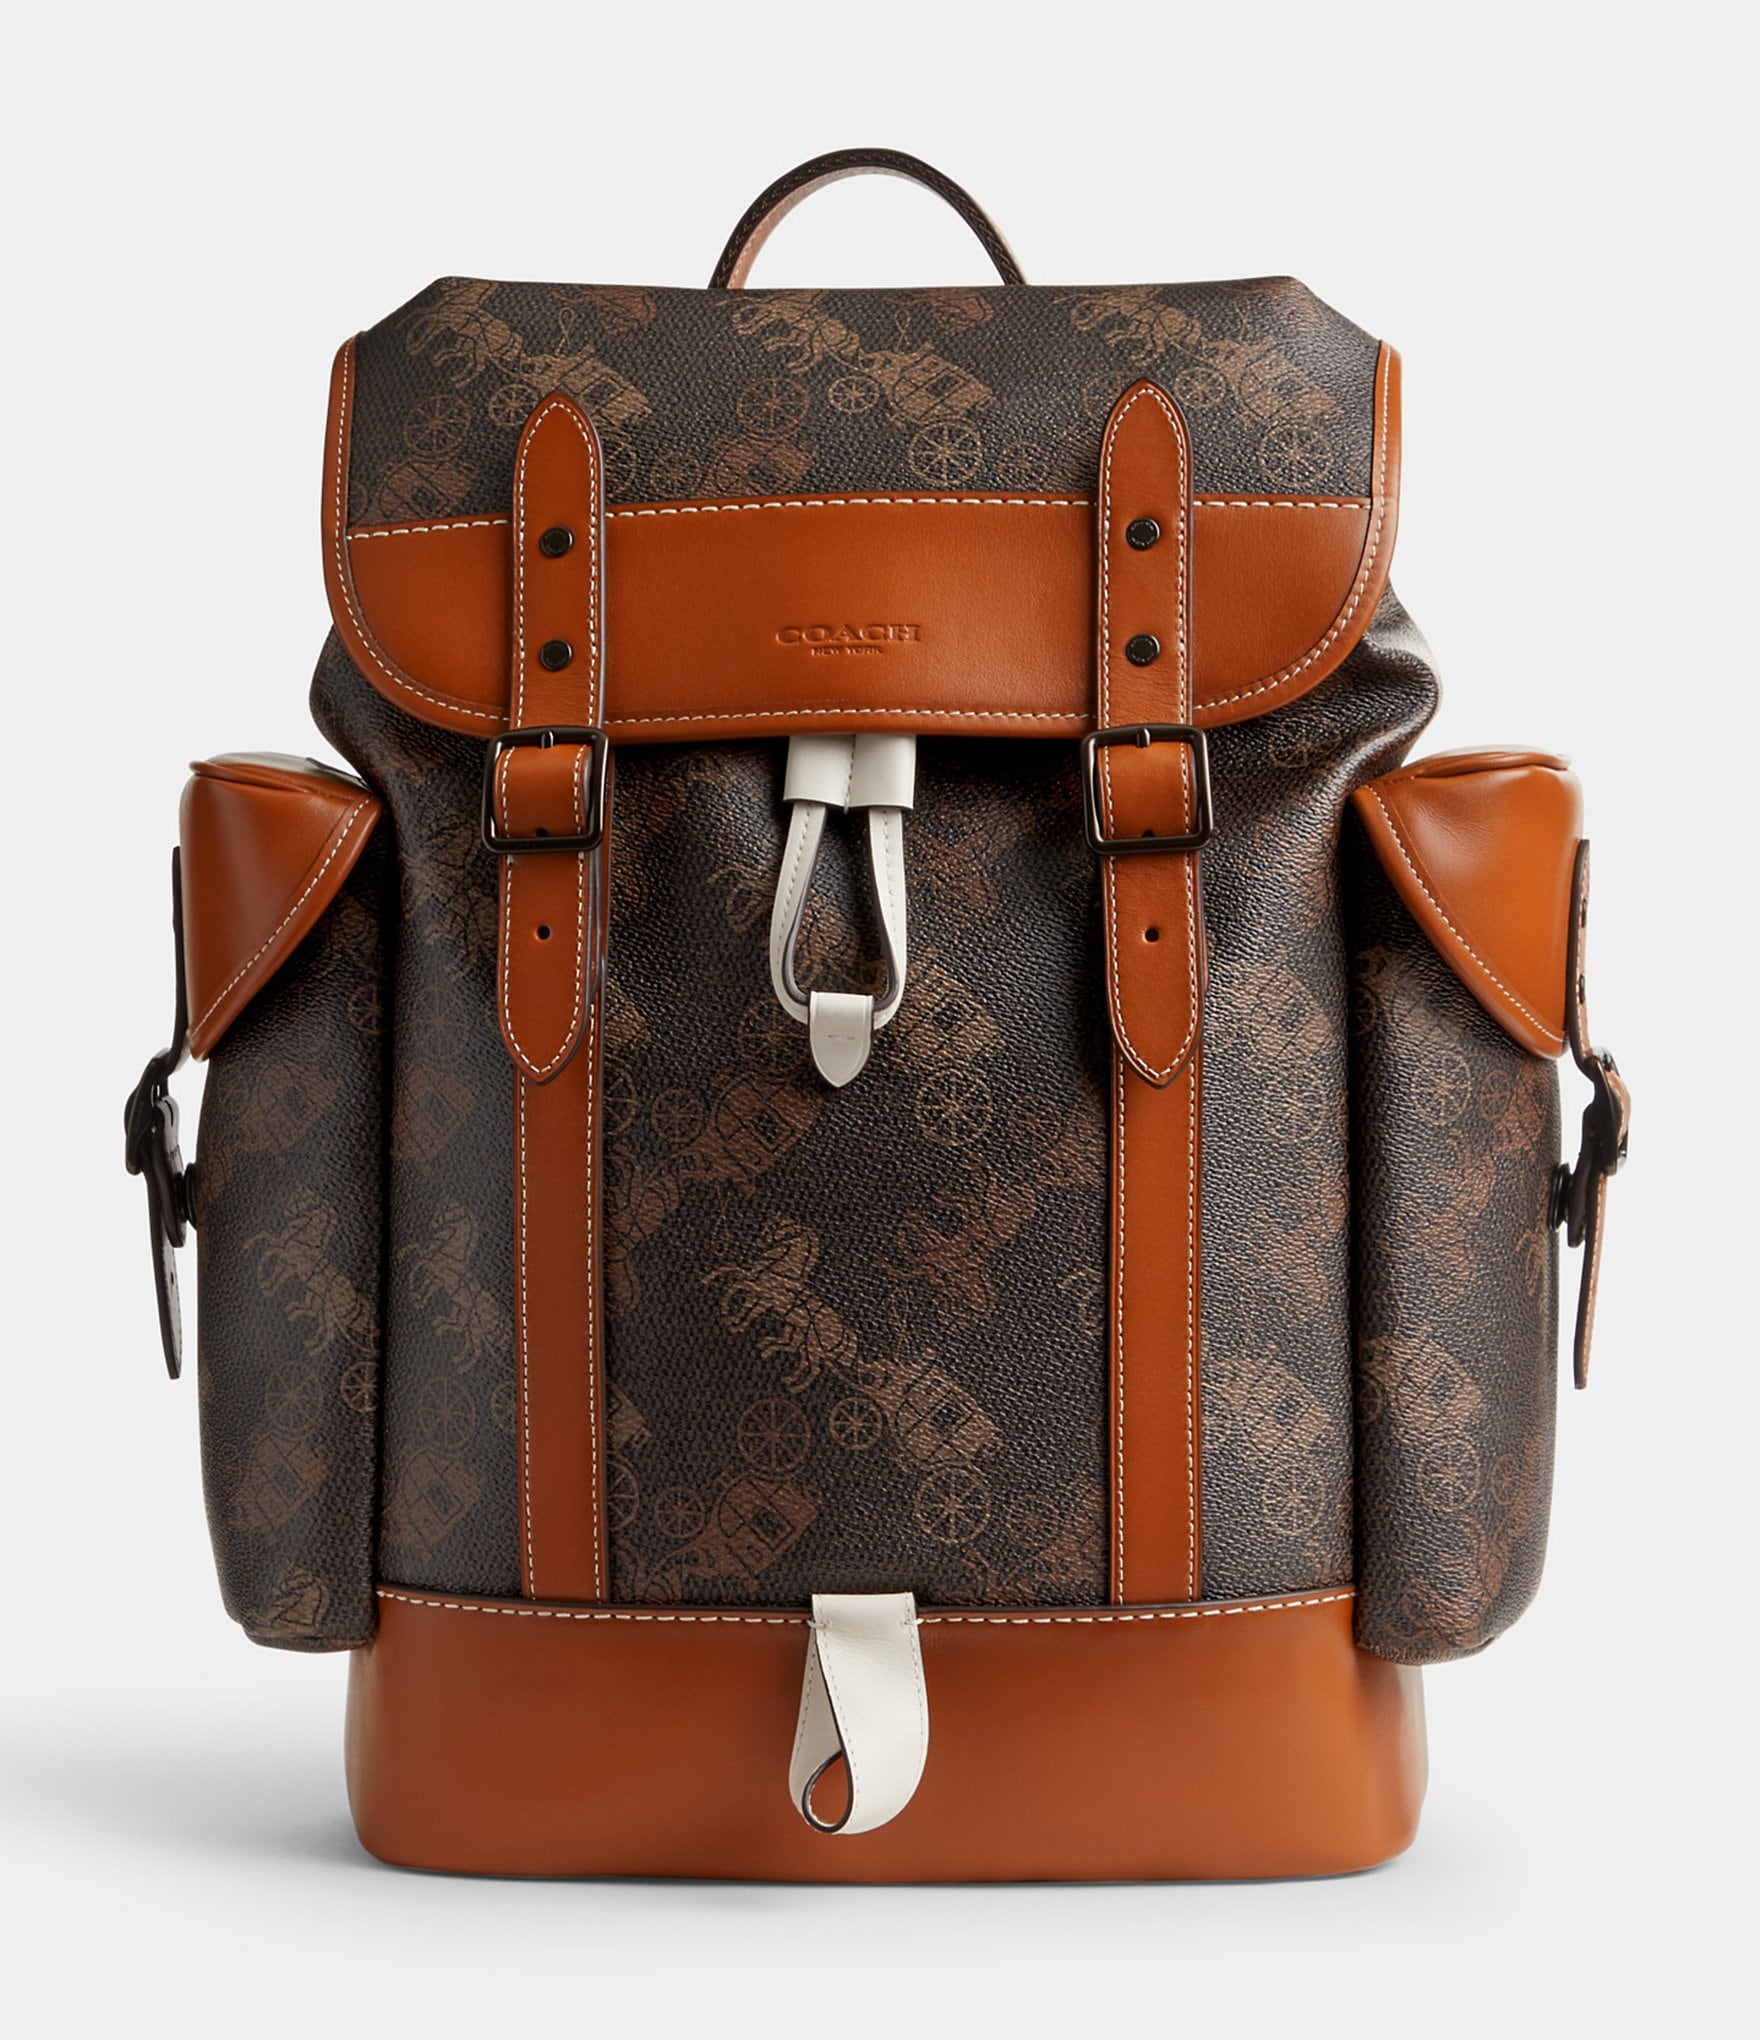 Are Louis Vuitton Bags At Dillards Real | CINEMAS 93